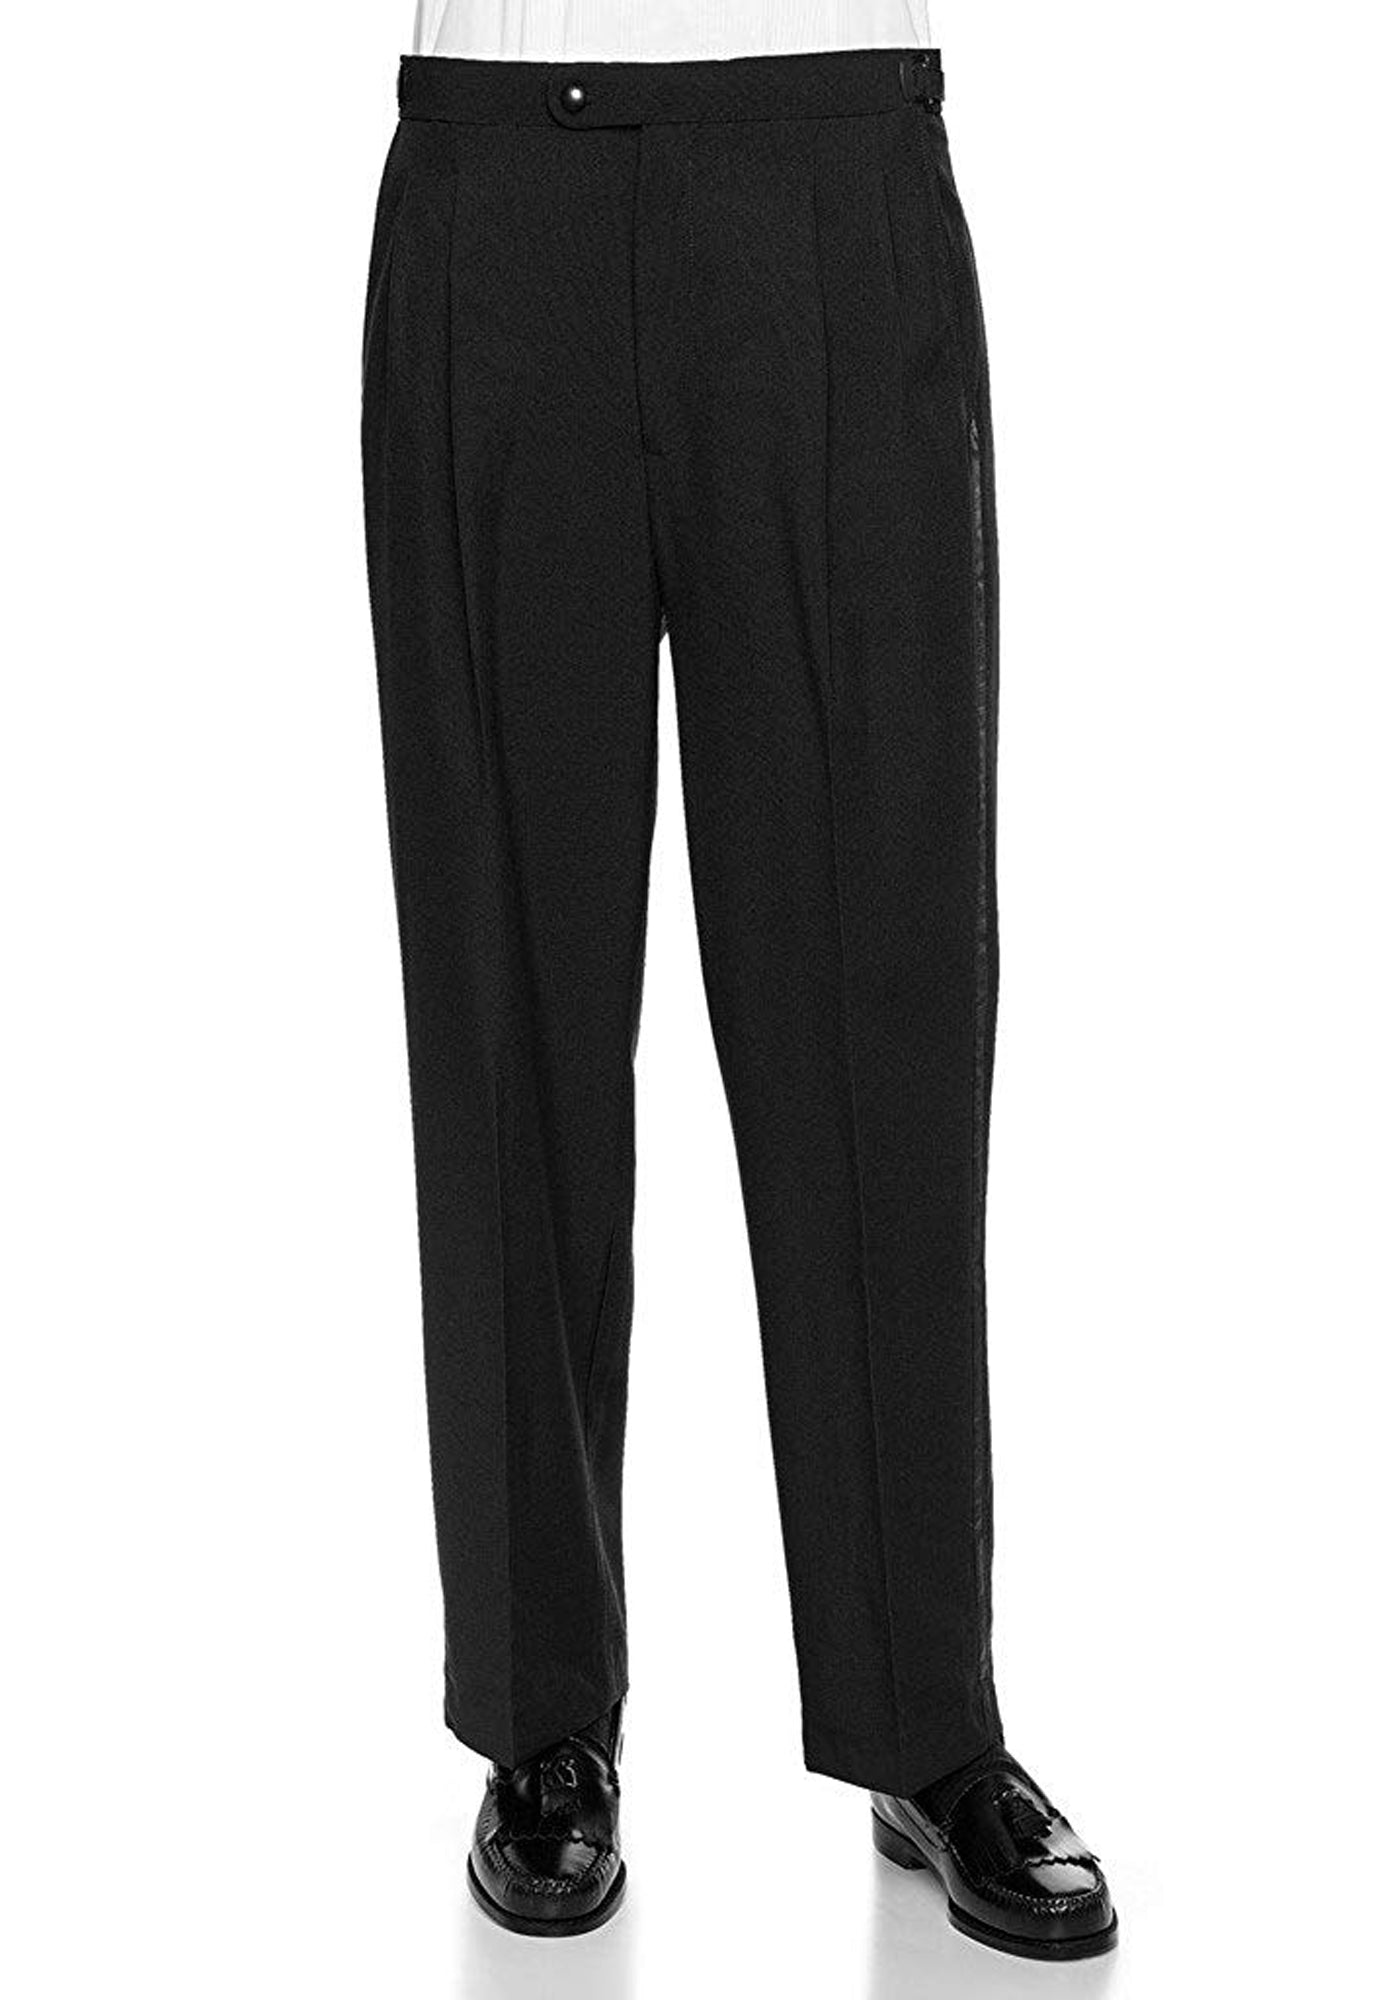 Men's Black, Pleated Front, Tuxedo Pants with Satin Stripe - 99tux